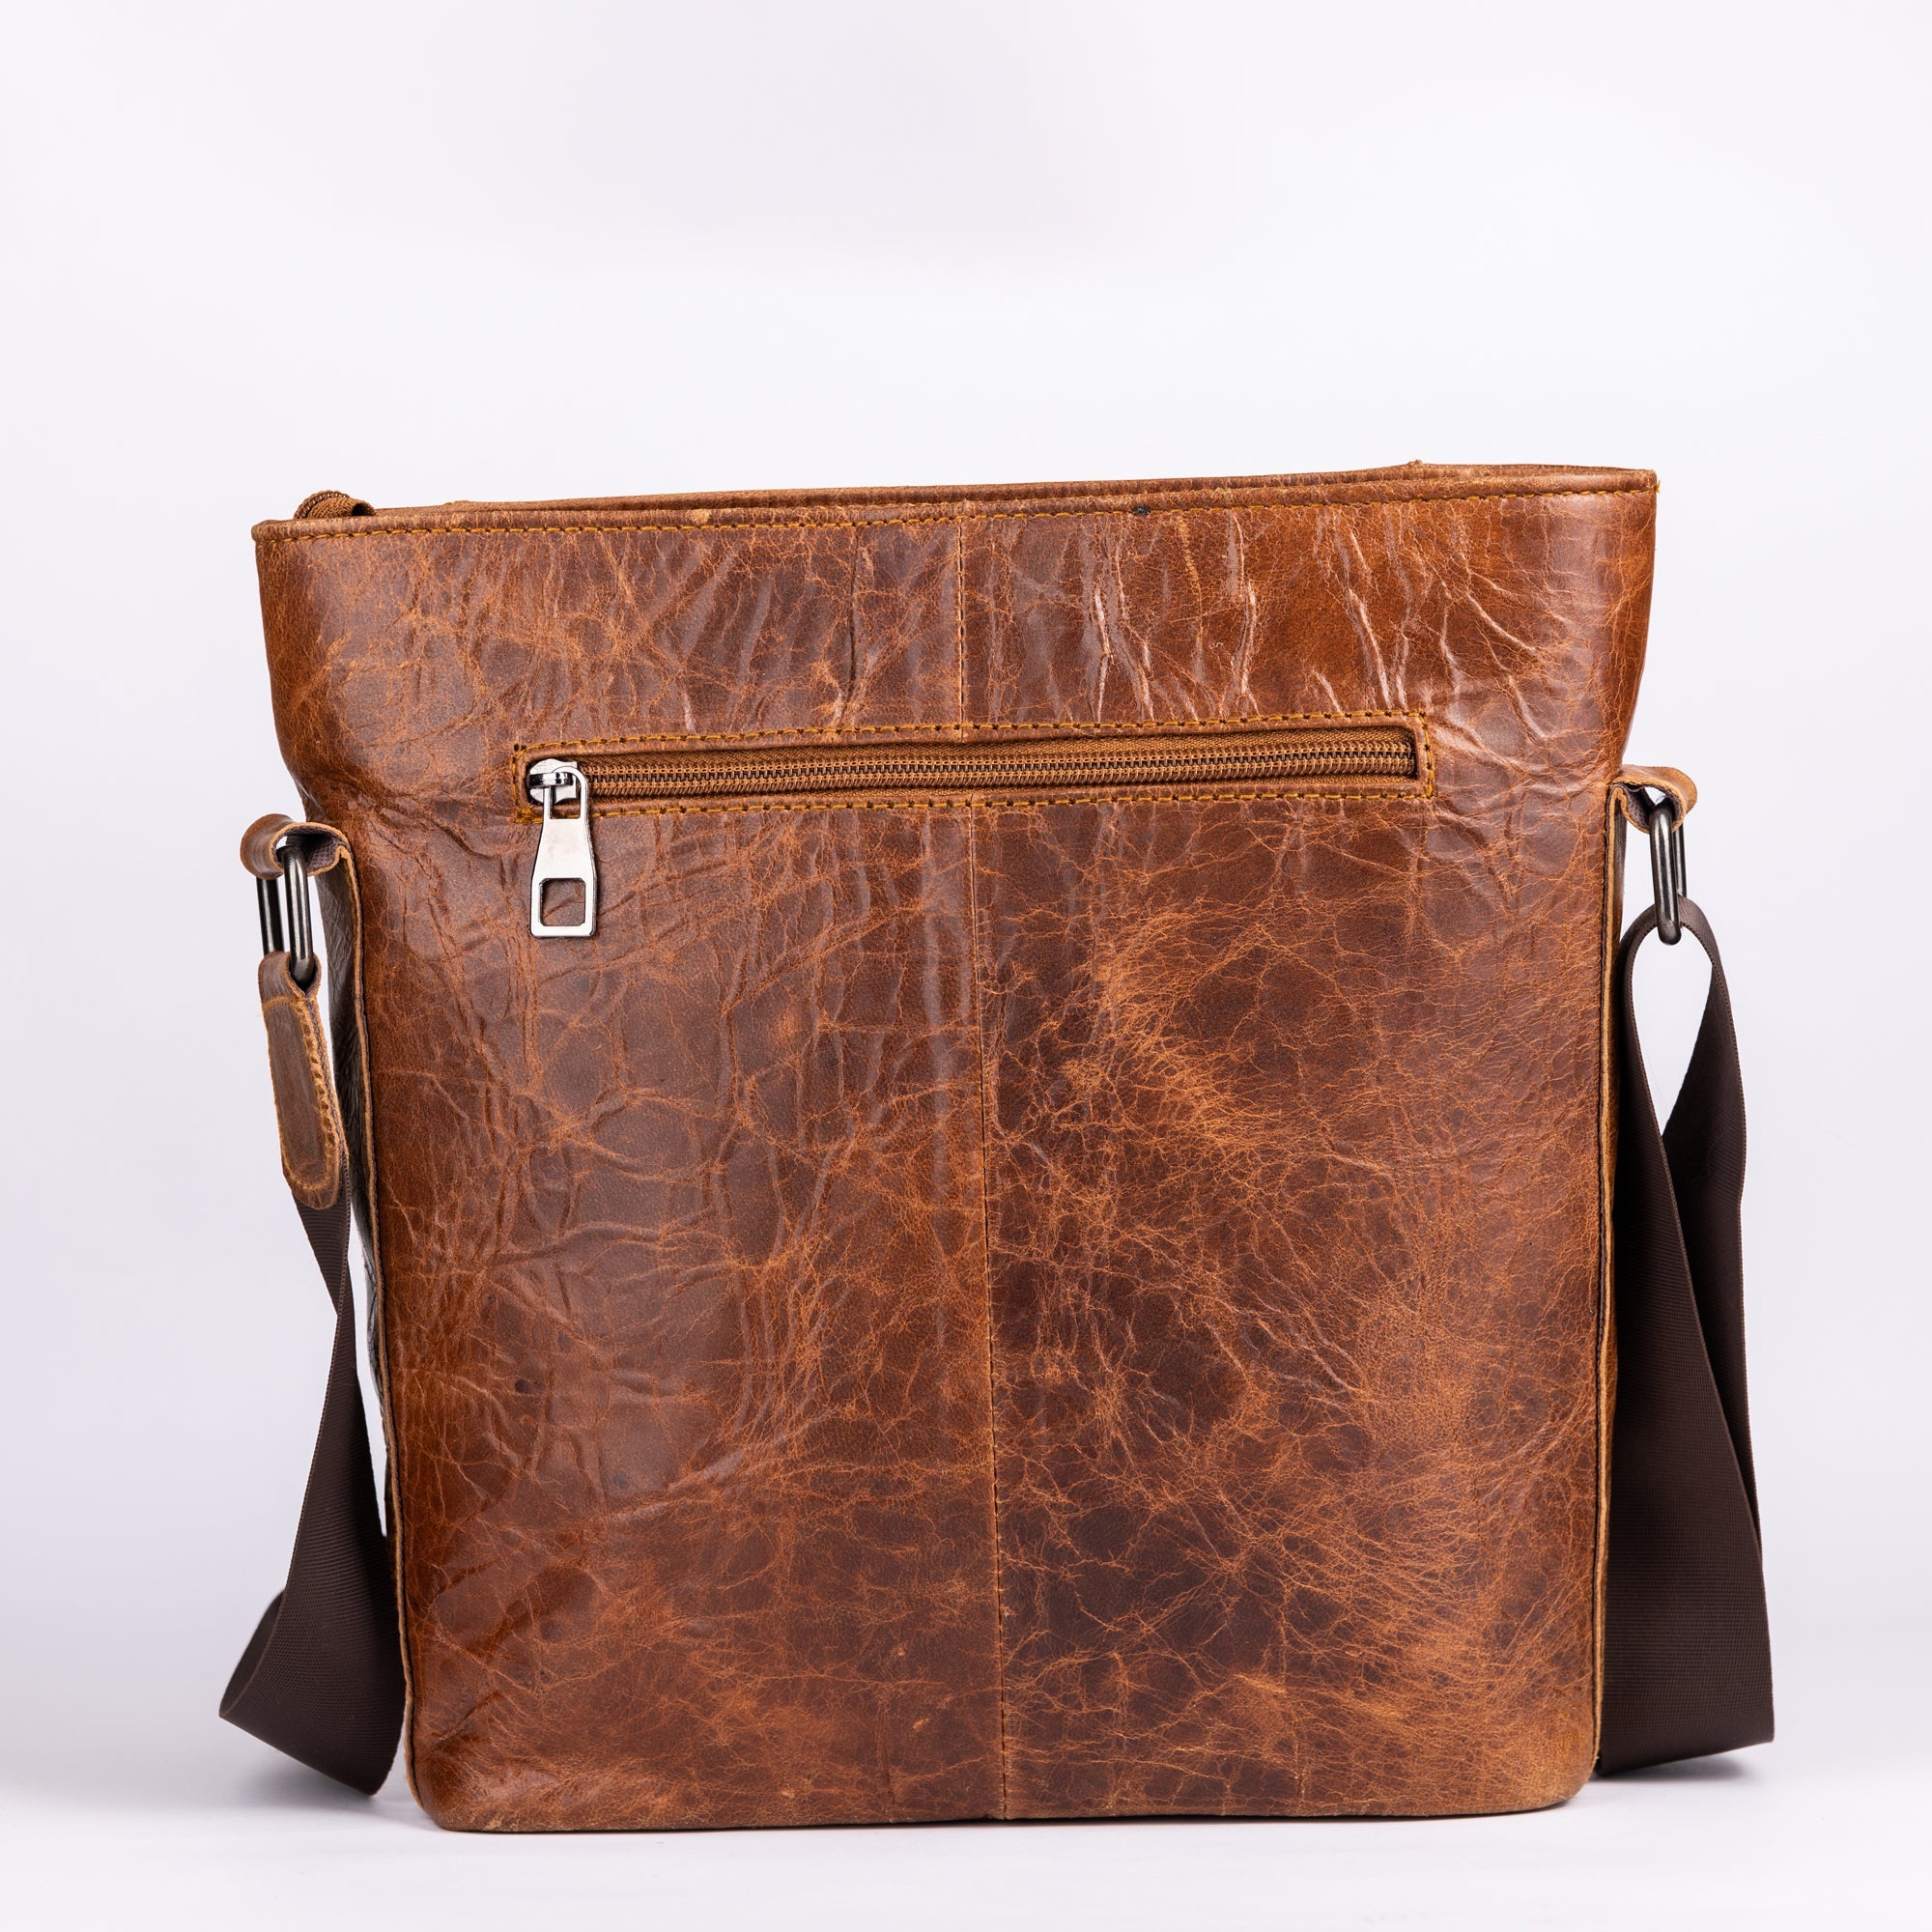 Strick Leather bag - Hatchill